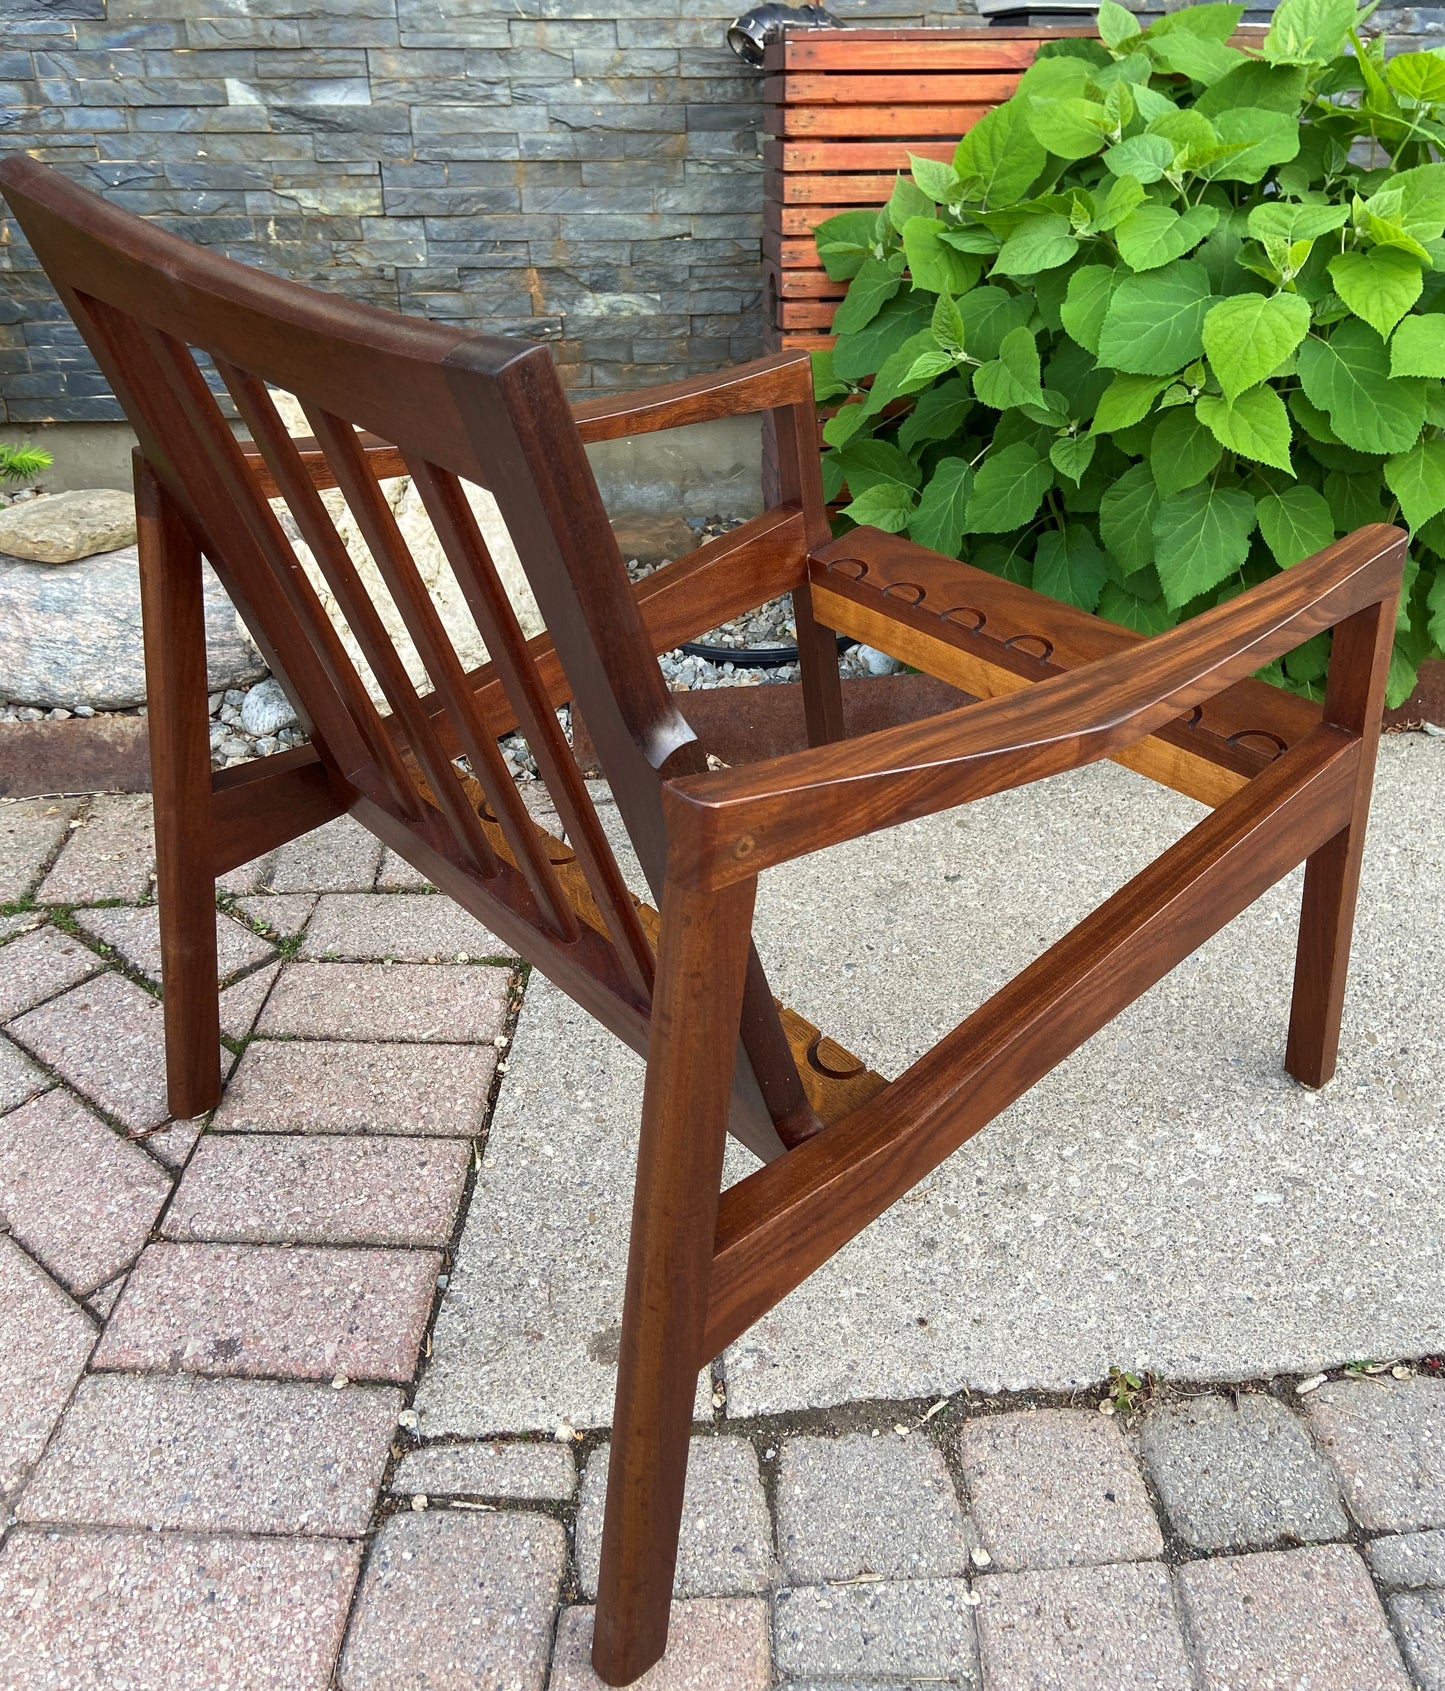 REFINISHED Danish Mid-Century Modern Teak Lounge Chair will get NEW CUSHIONS